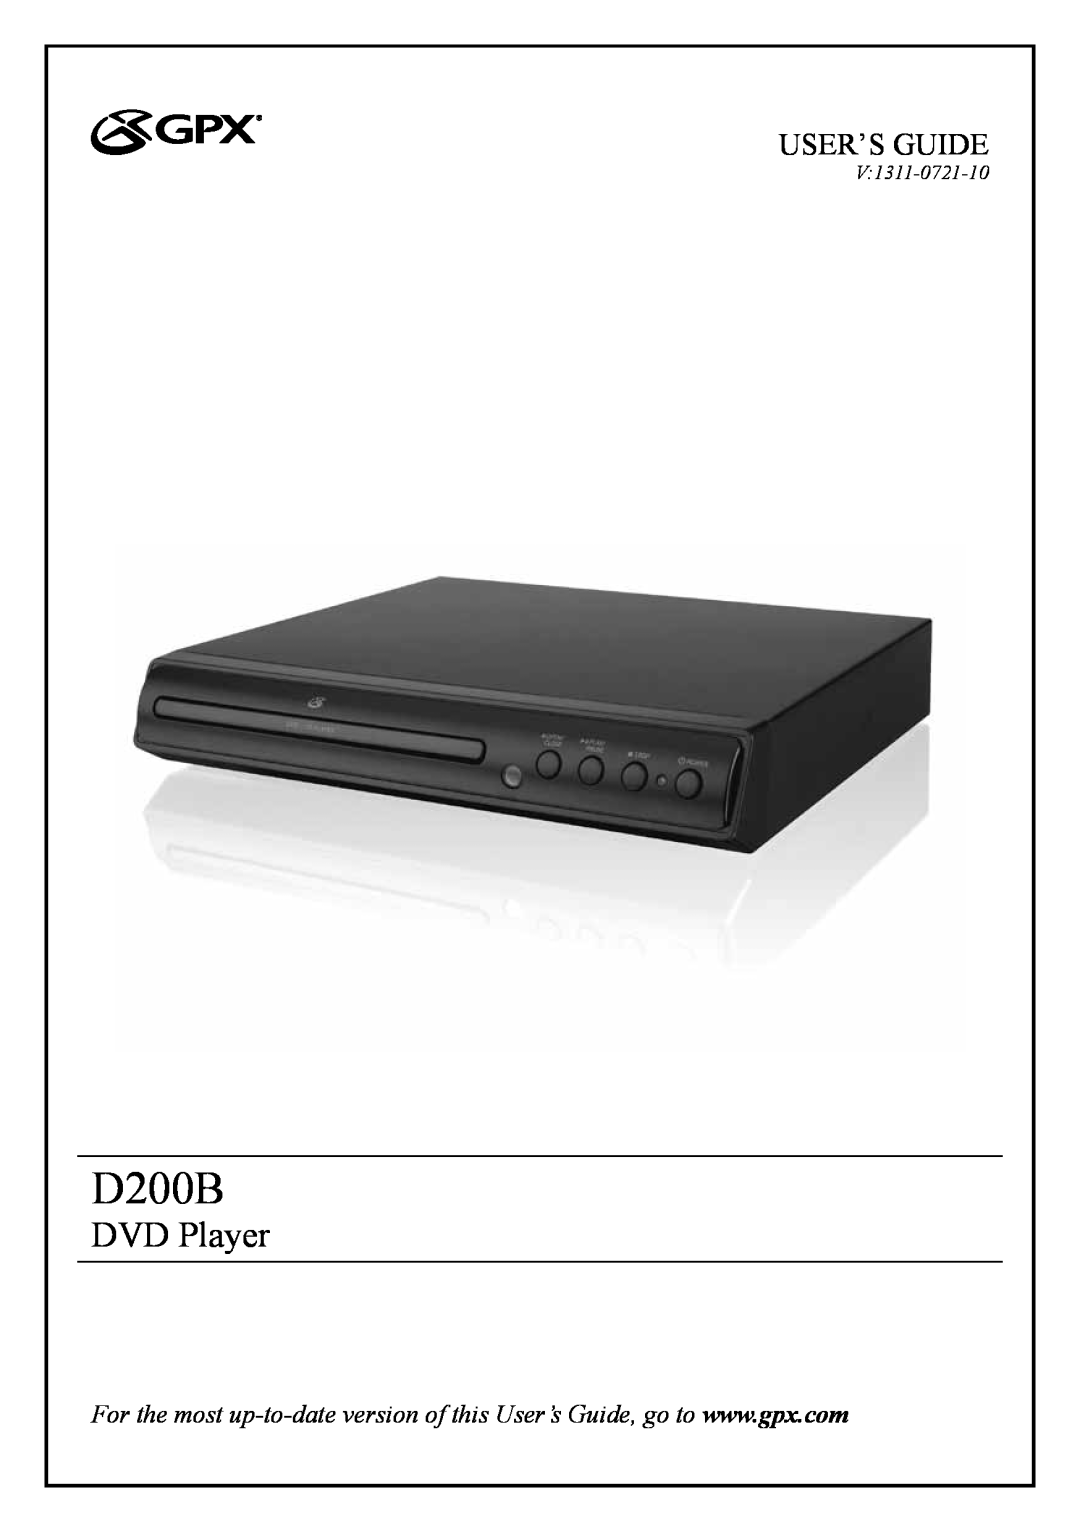 GPX D200B manual DVD Player, User’S Guide, V1311-0721-10 